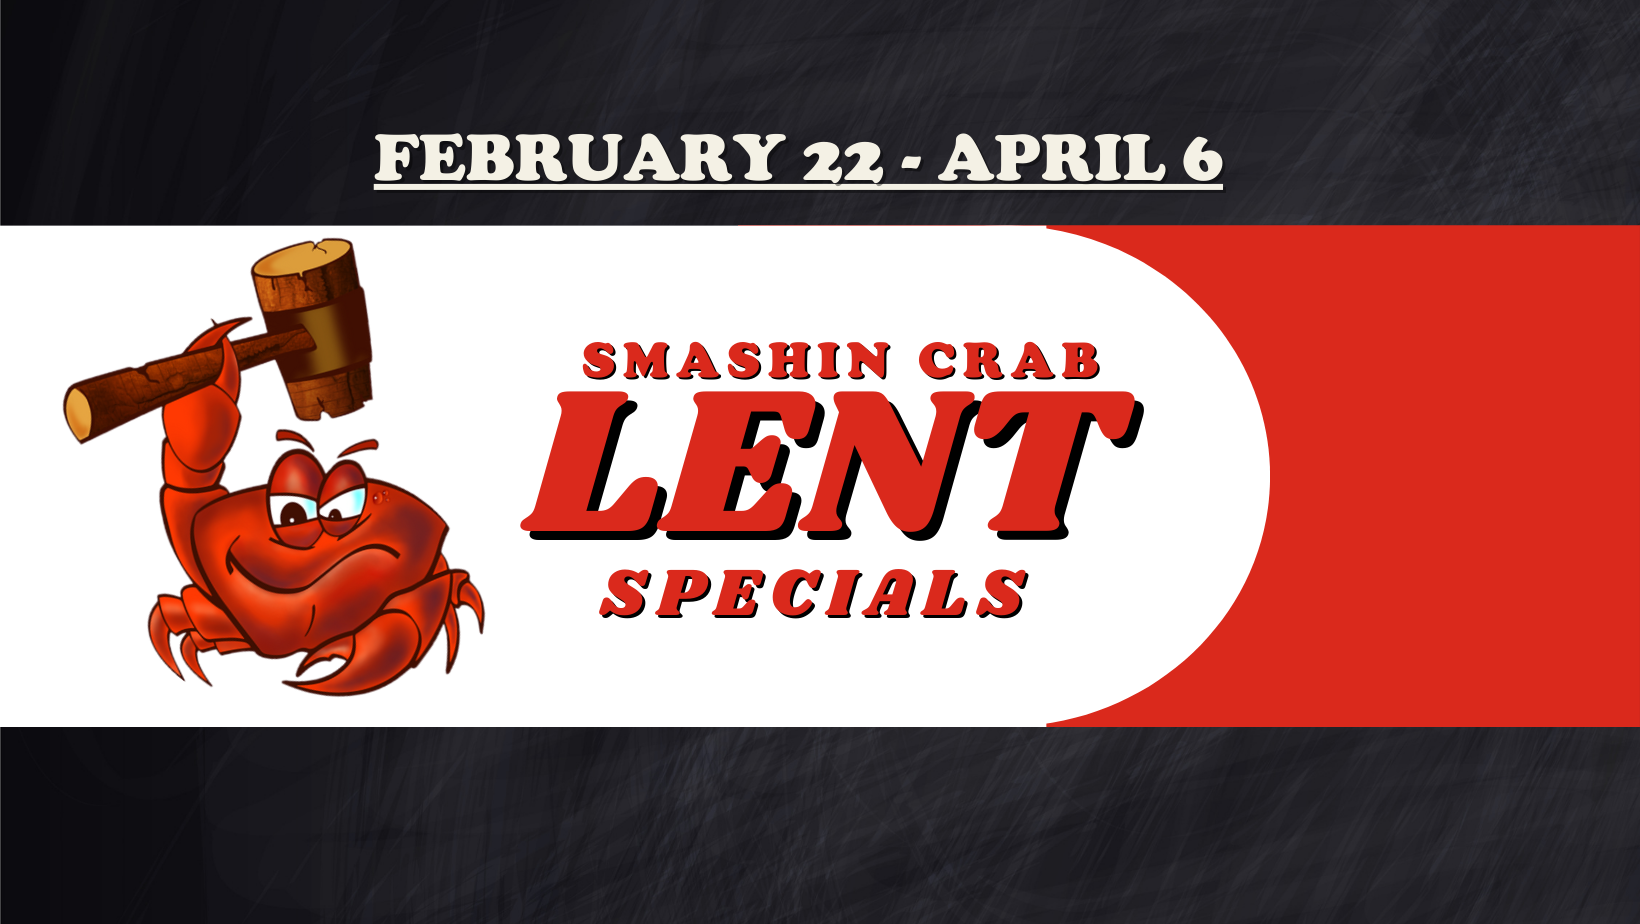 Flyer for Lent at Smashin' Crab